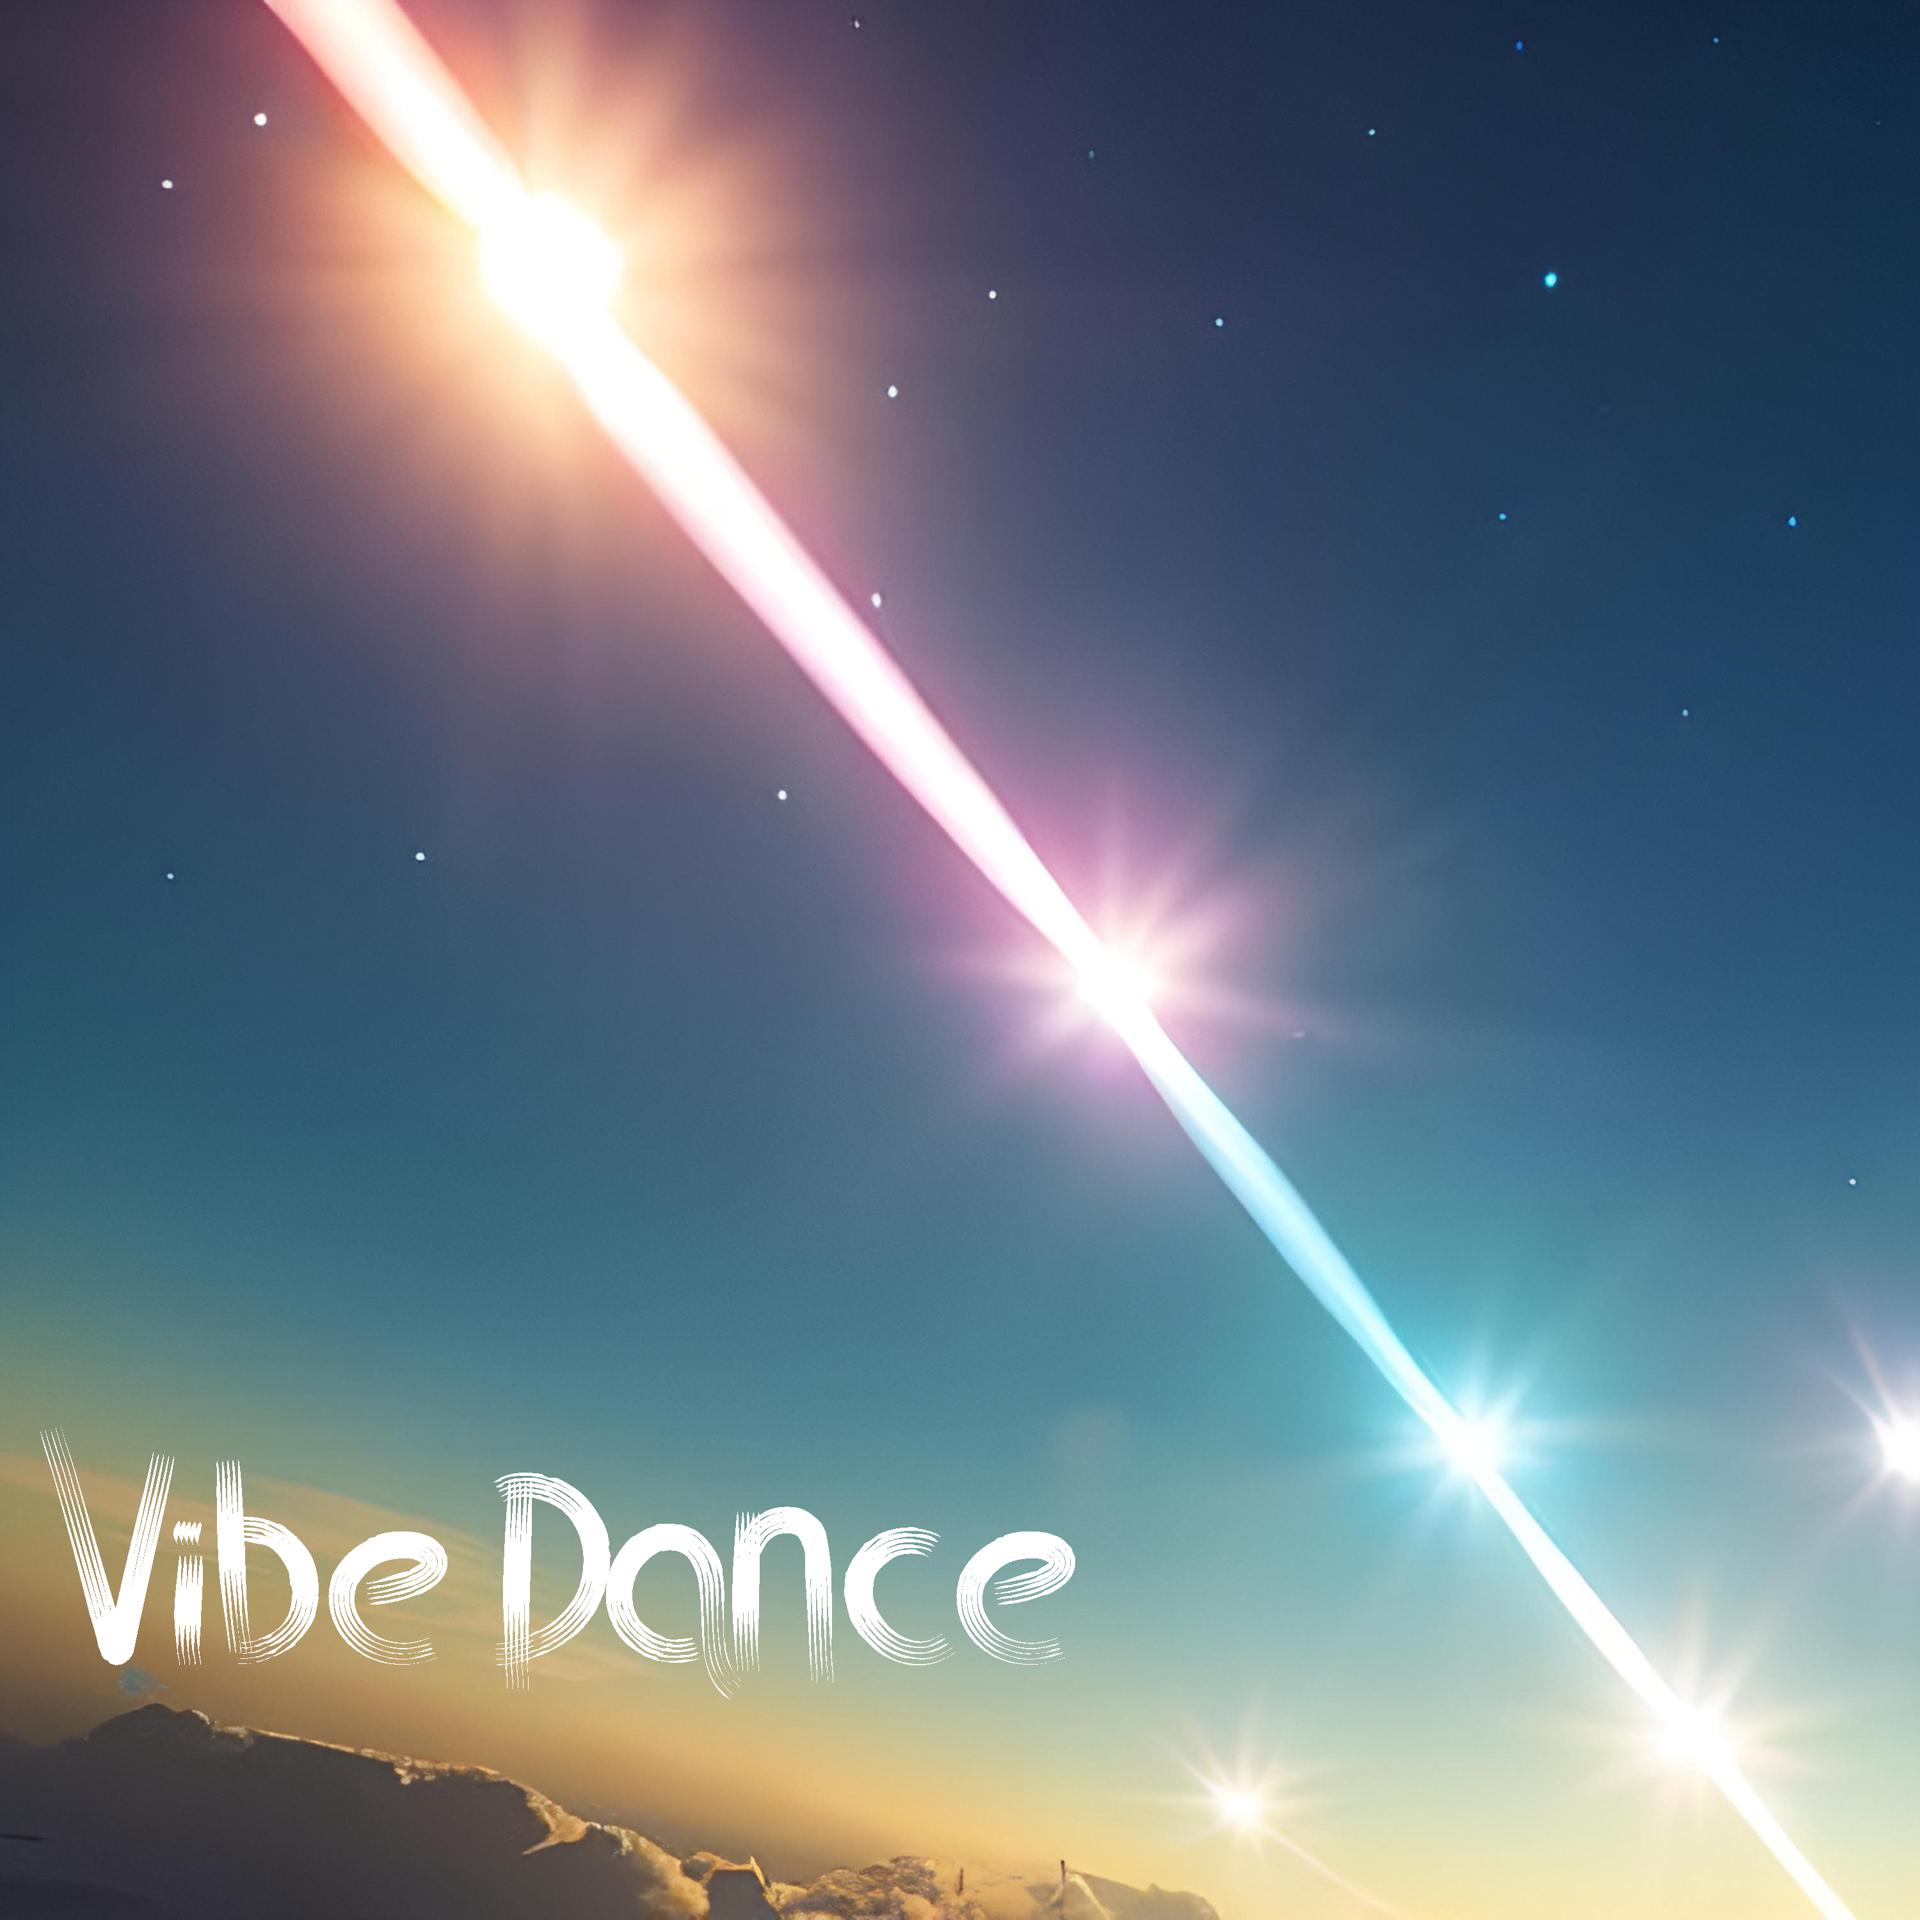 Vibe dance. Neon Vibe.